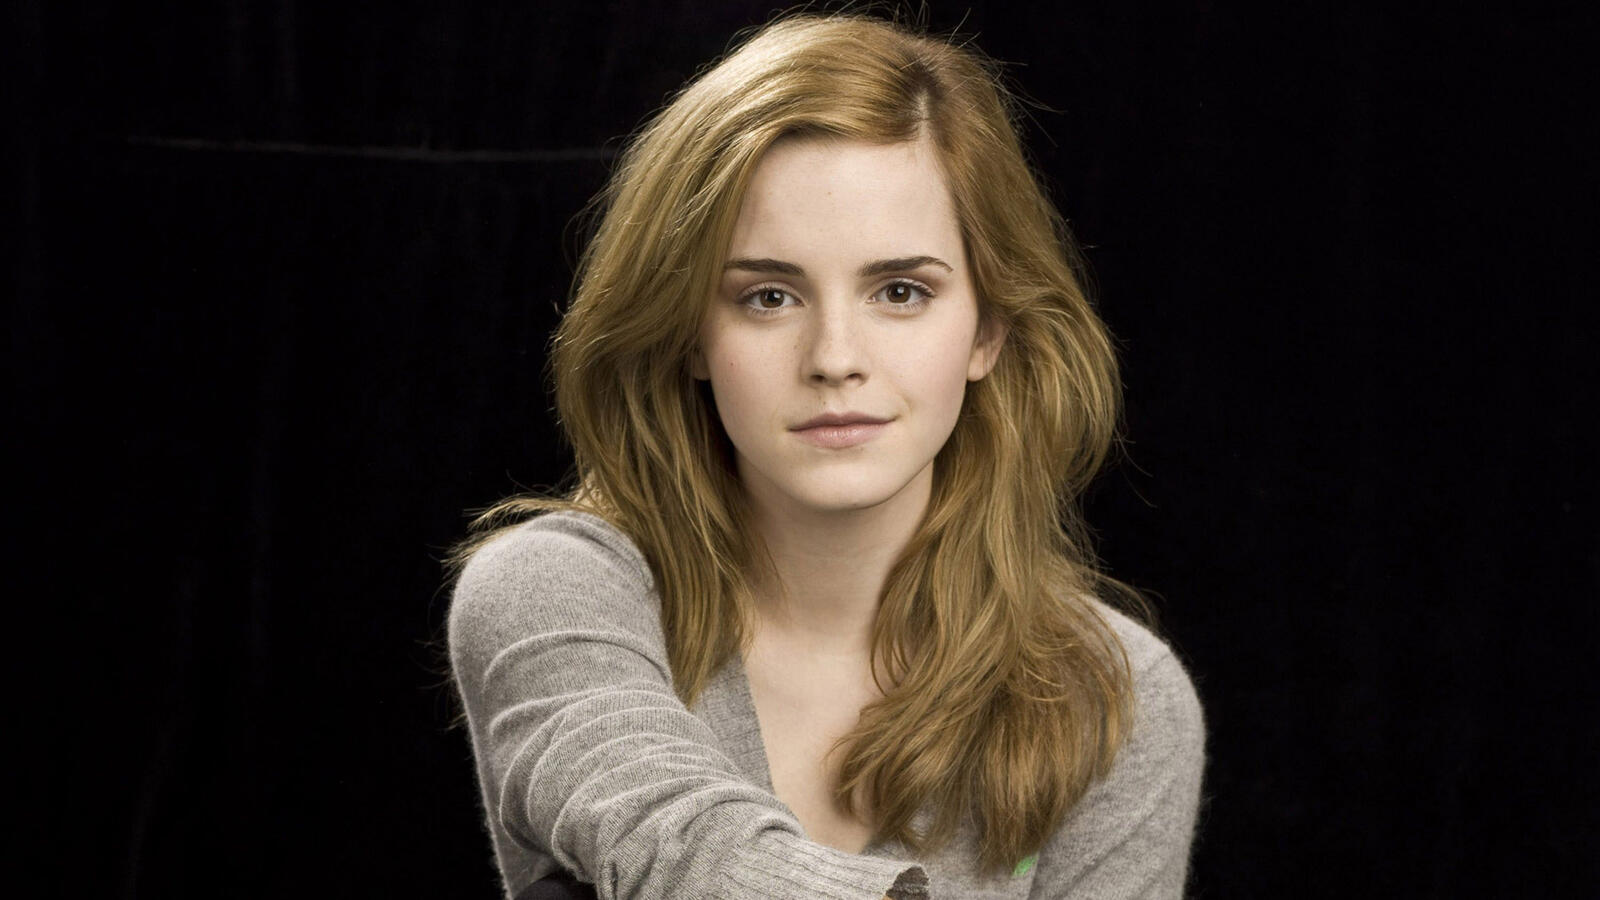 Wallpapers Emma Watson celebrities girls on the desktop